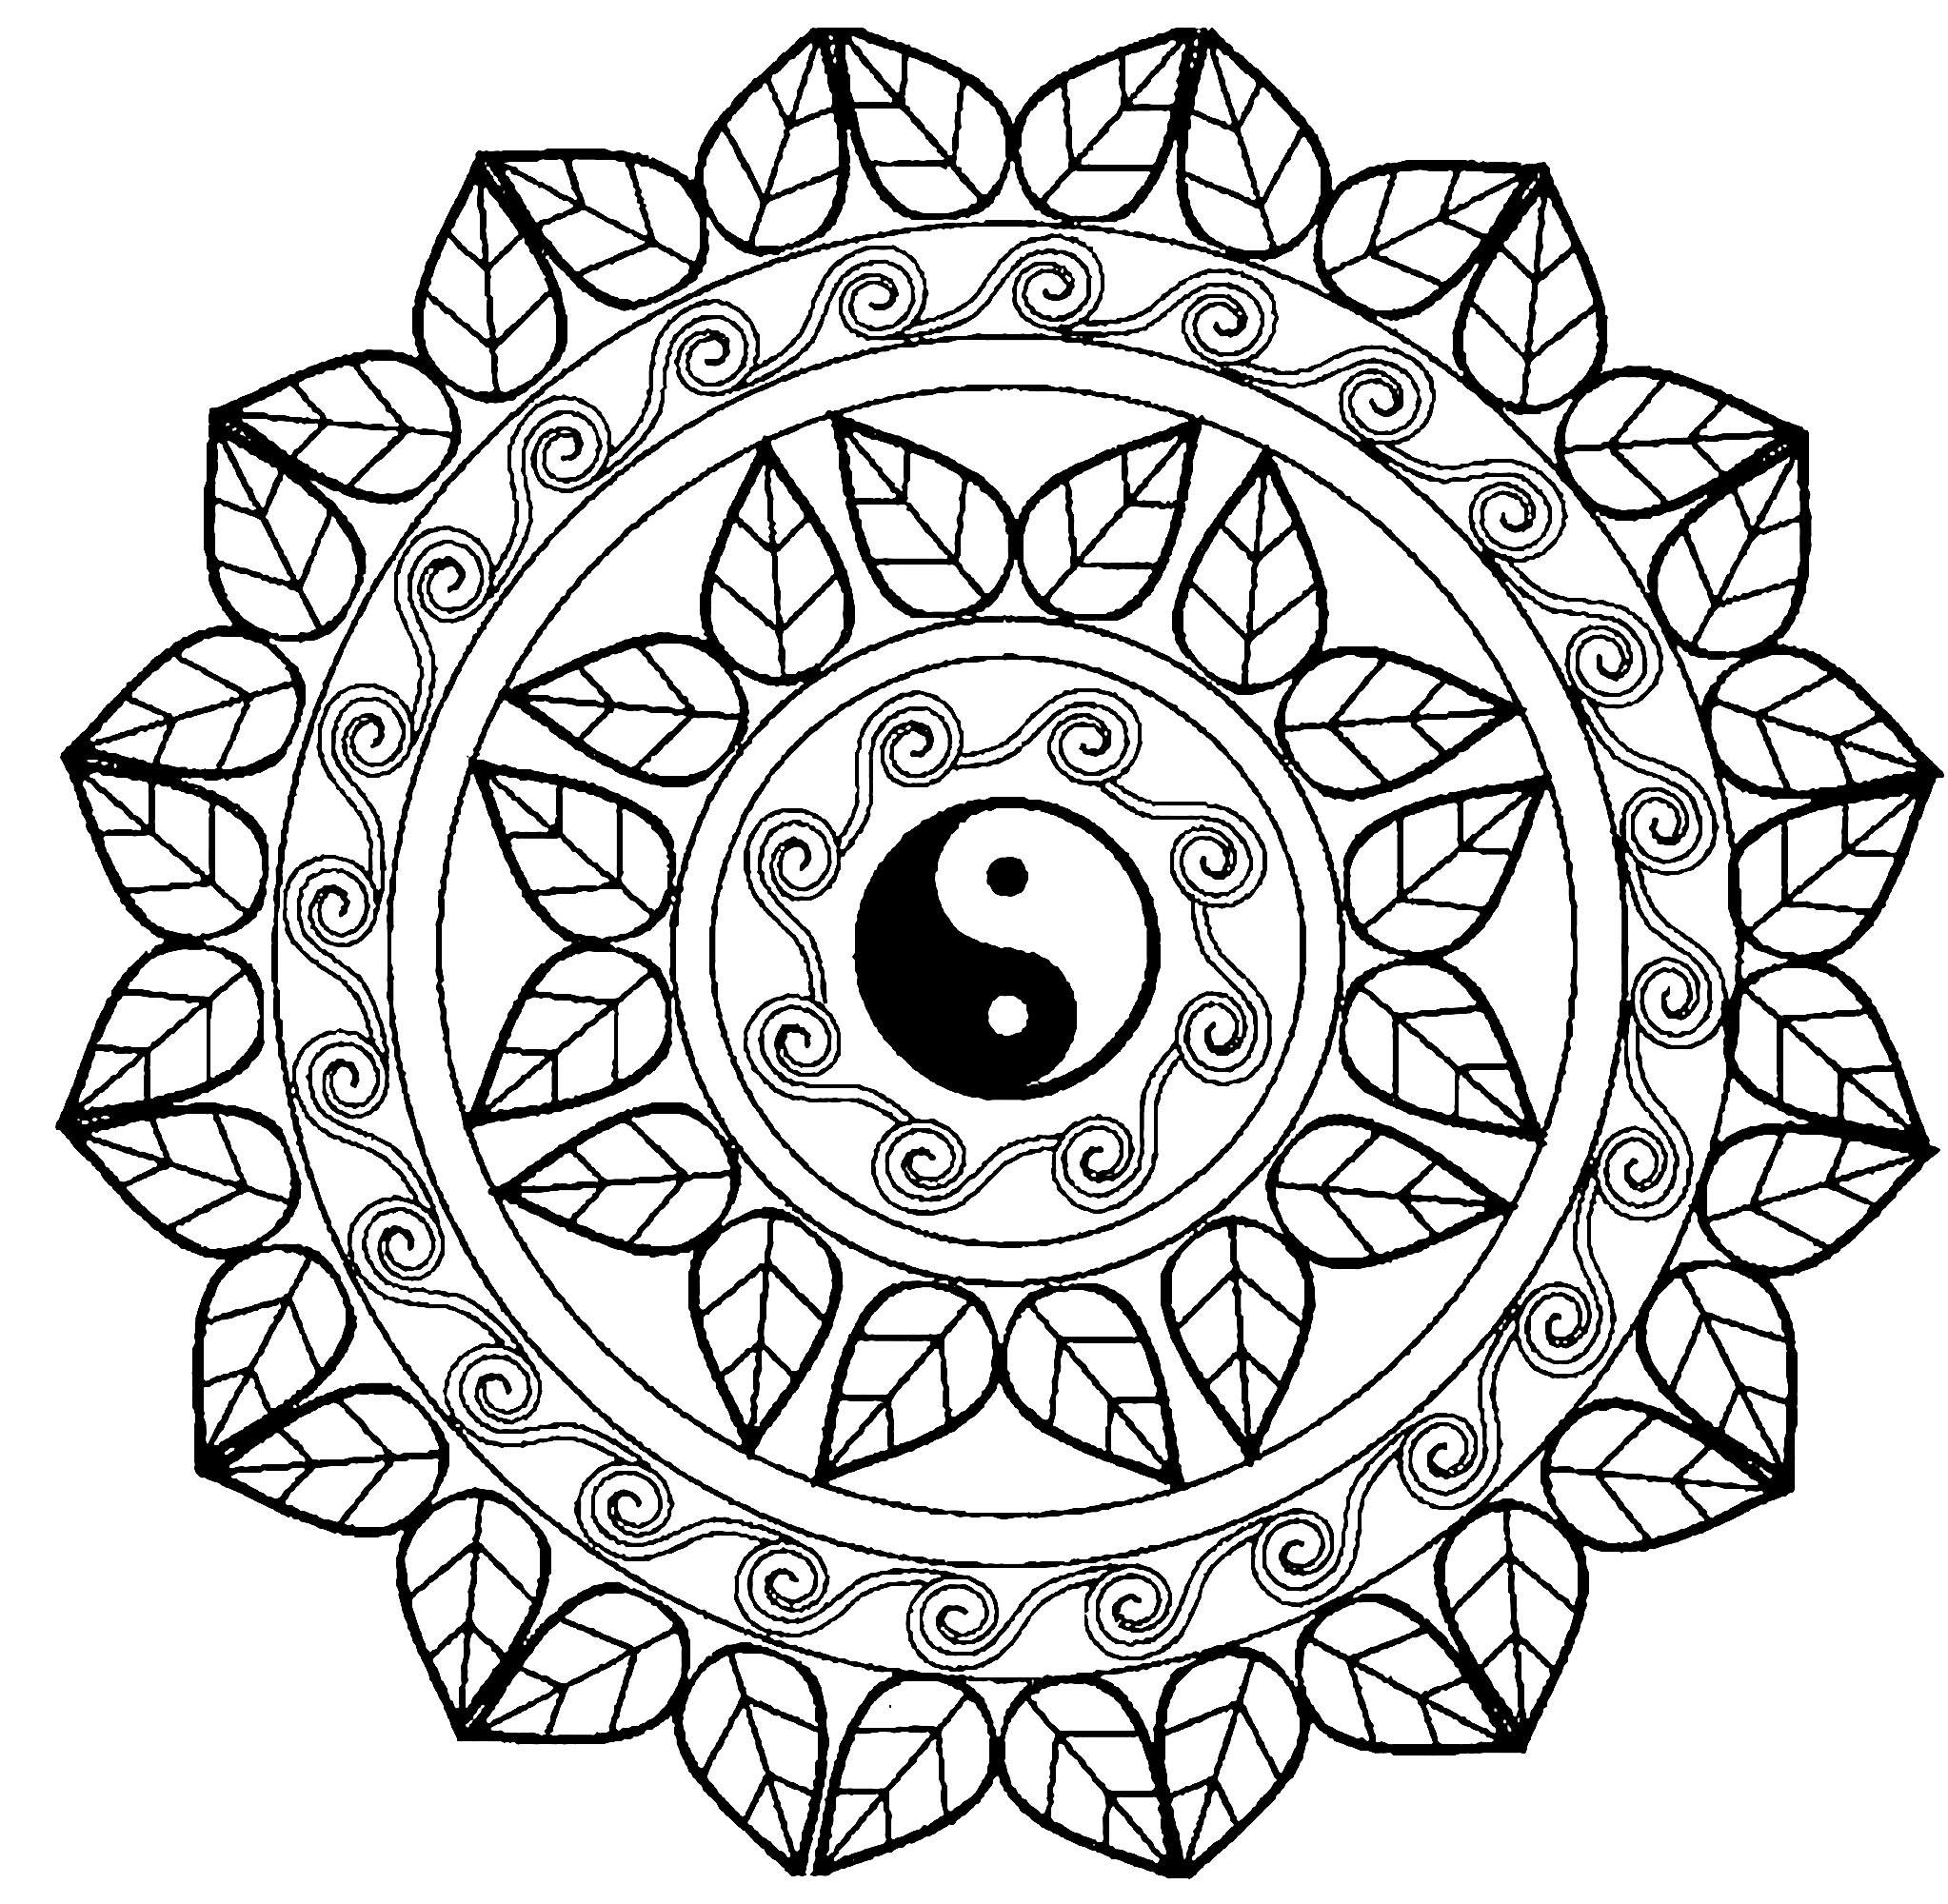 Disegni da colorare per adulti Mandalas 209 Immagine prendente Yin Yang Stampa